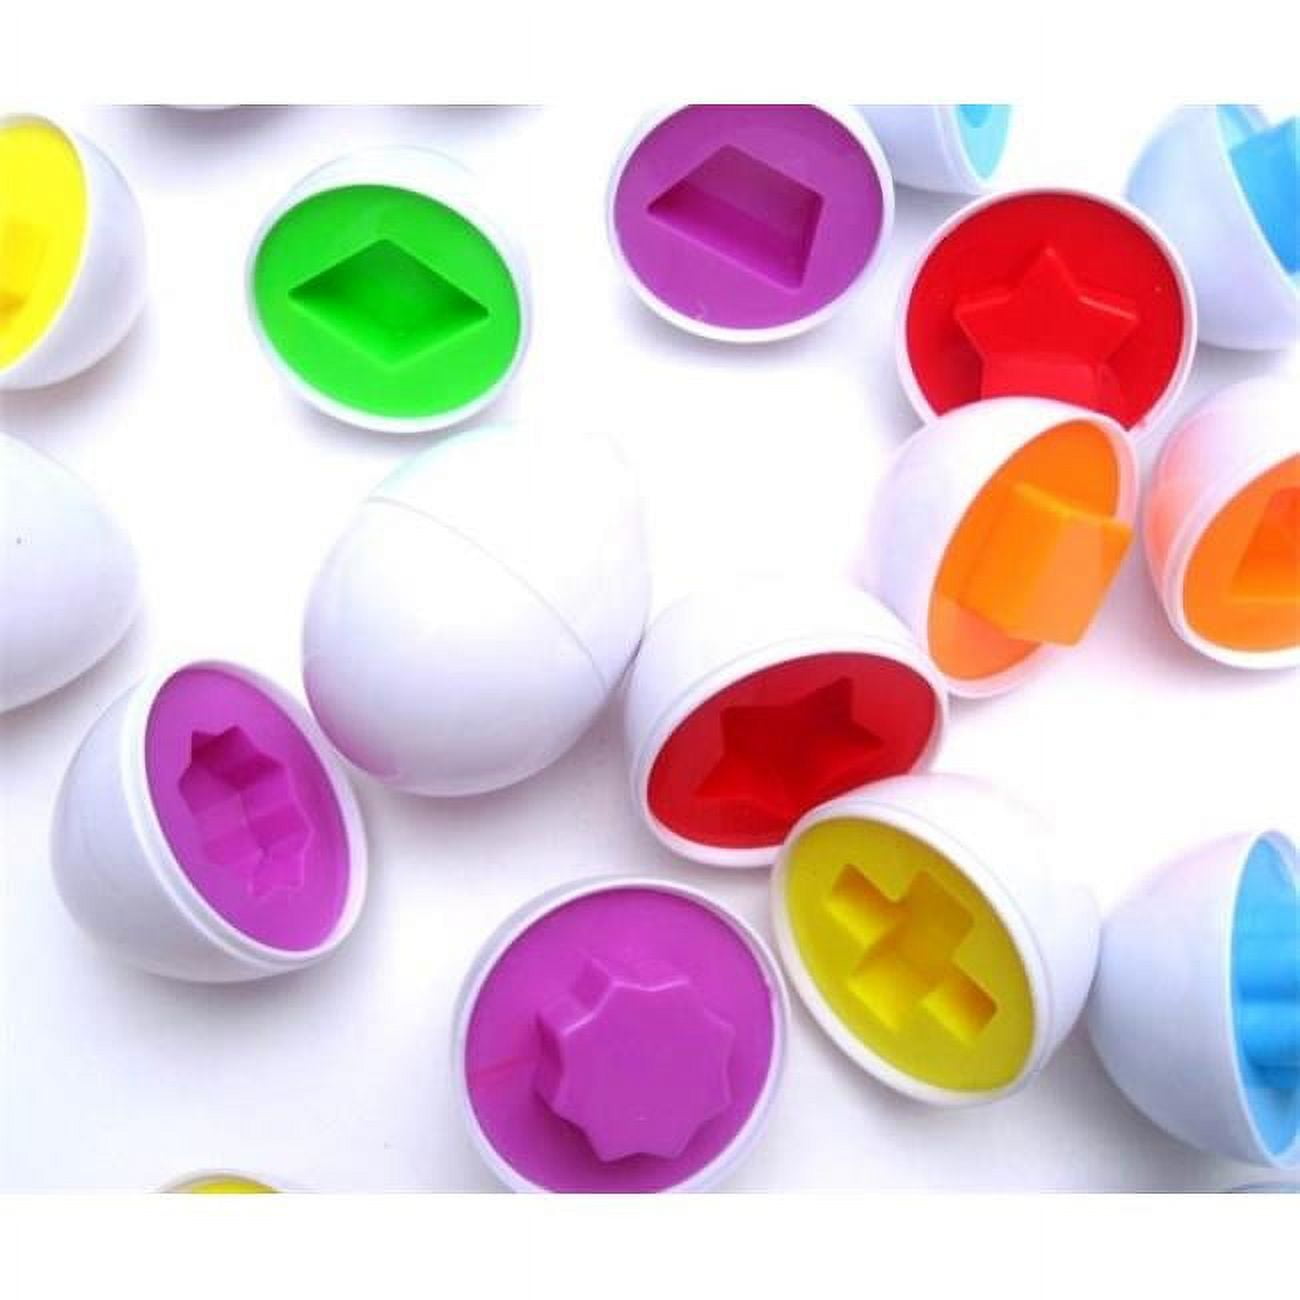 Pz2011 Educational Matching Shape & Color Eggs Game